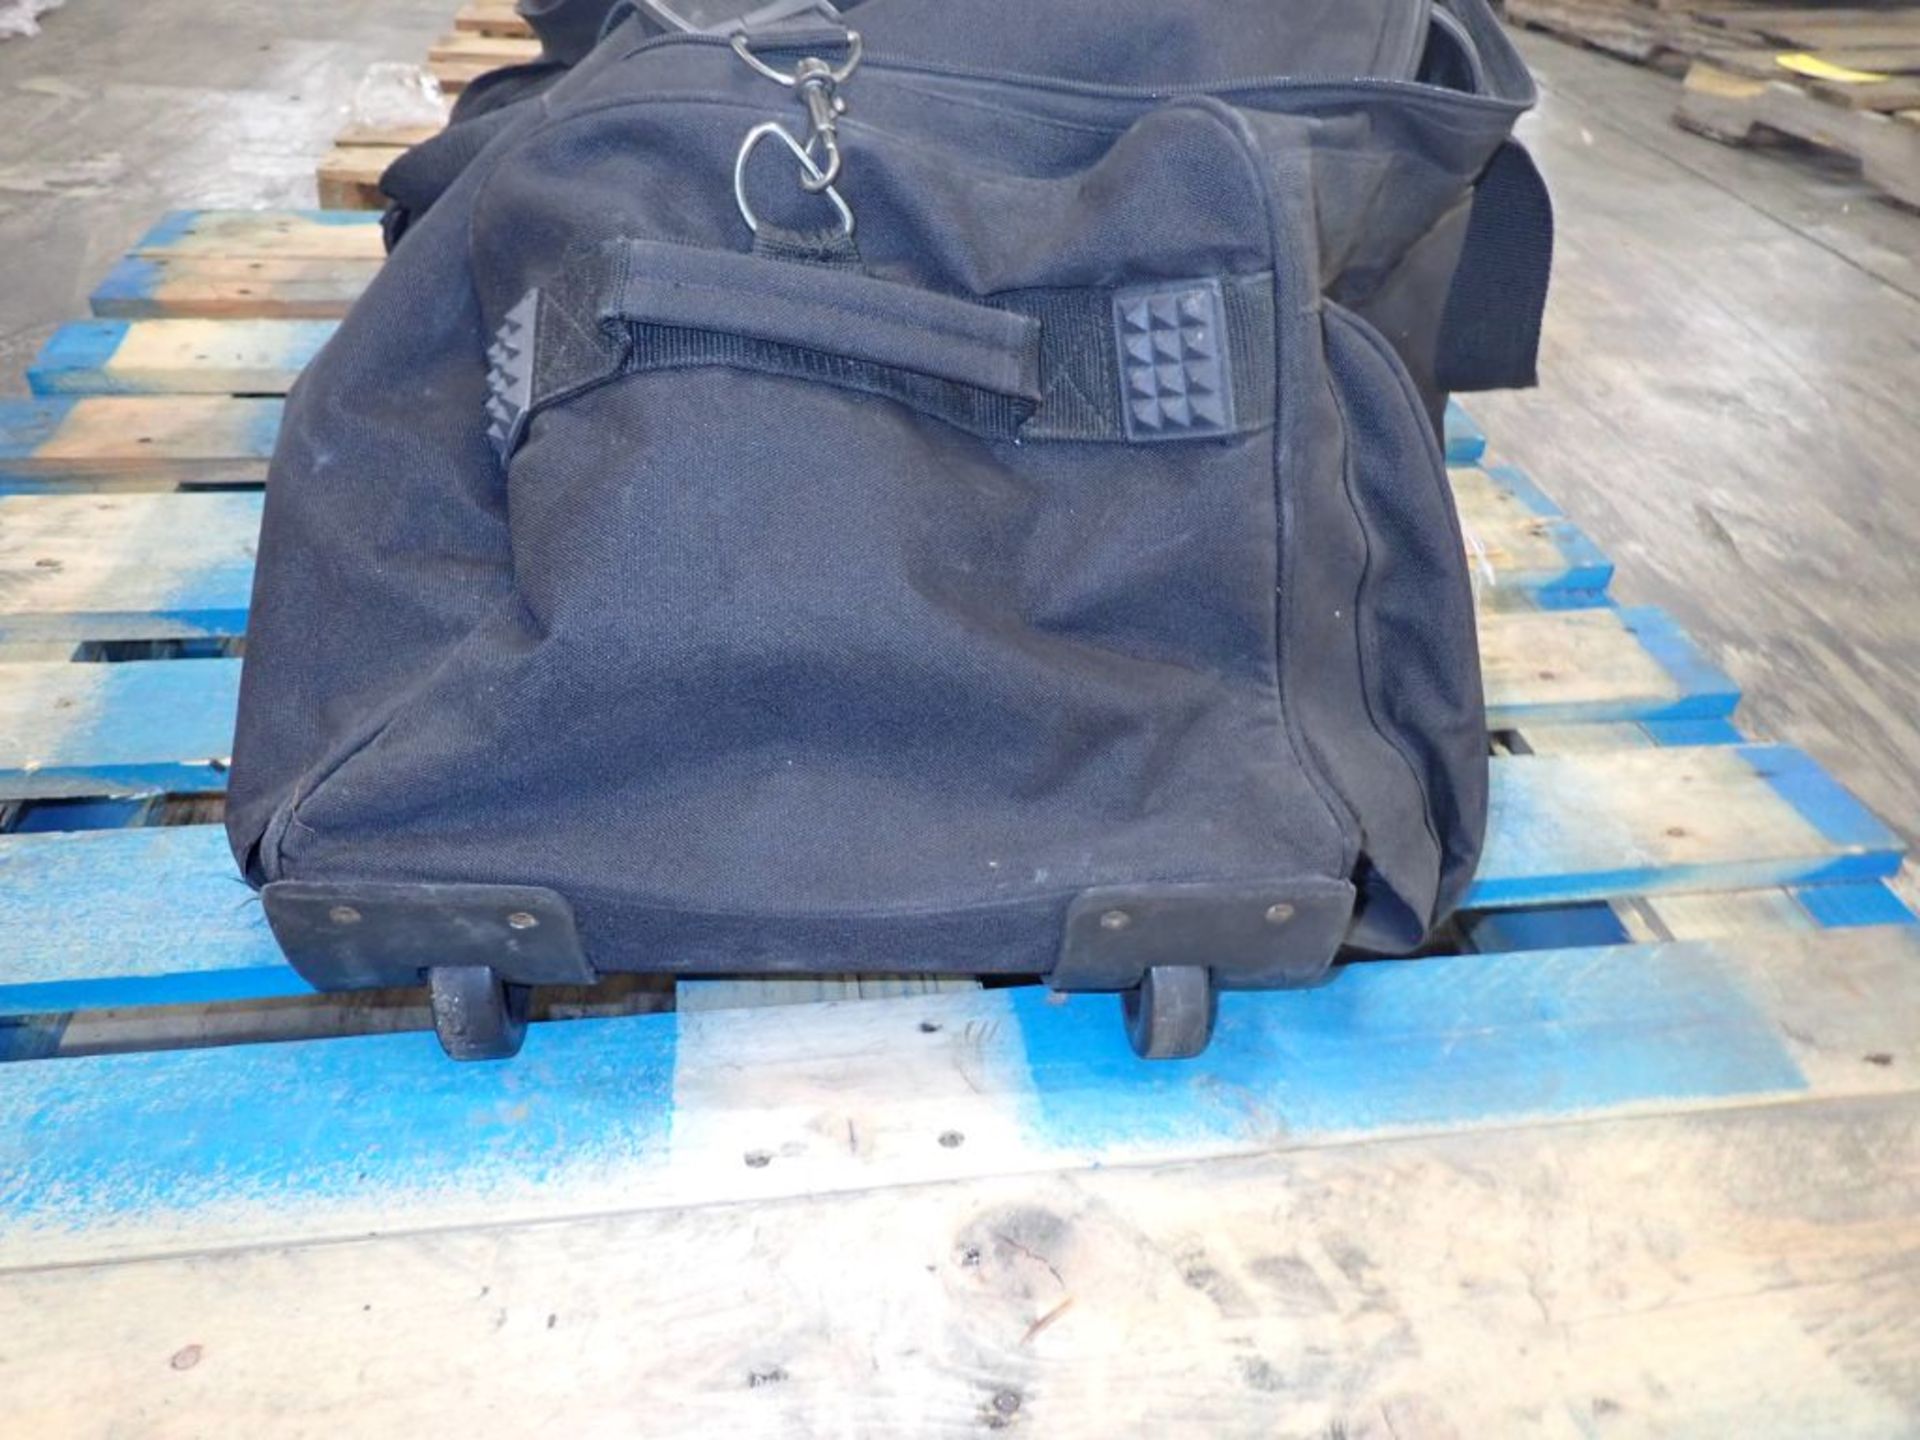 Drieaze Portable Duffle Bag - Image 3 of 6